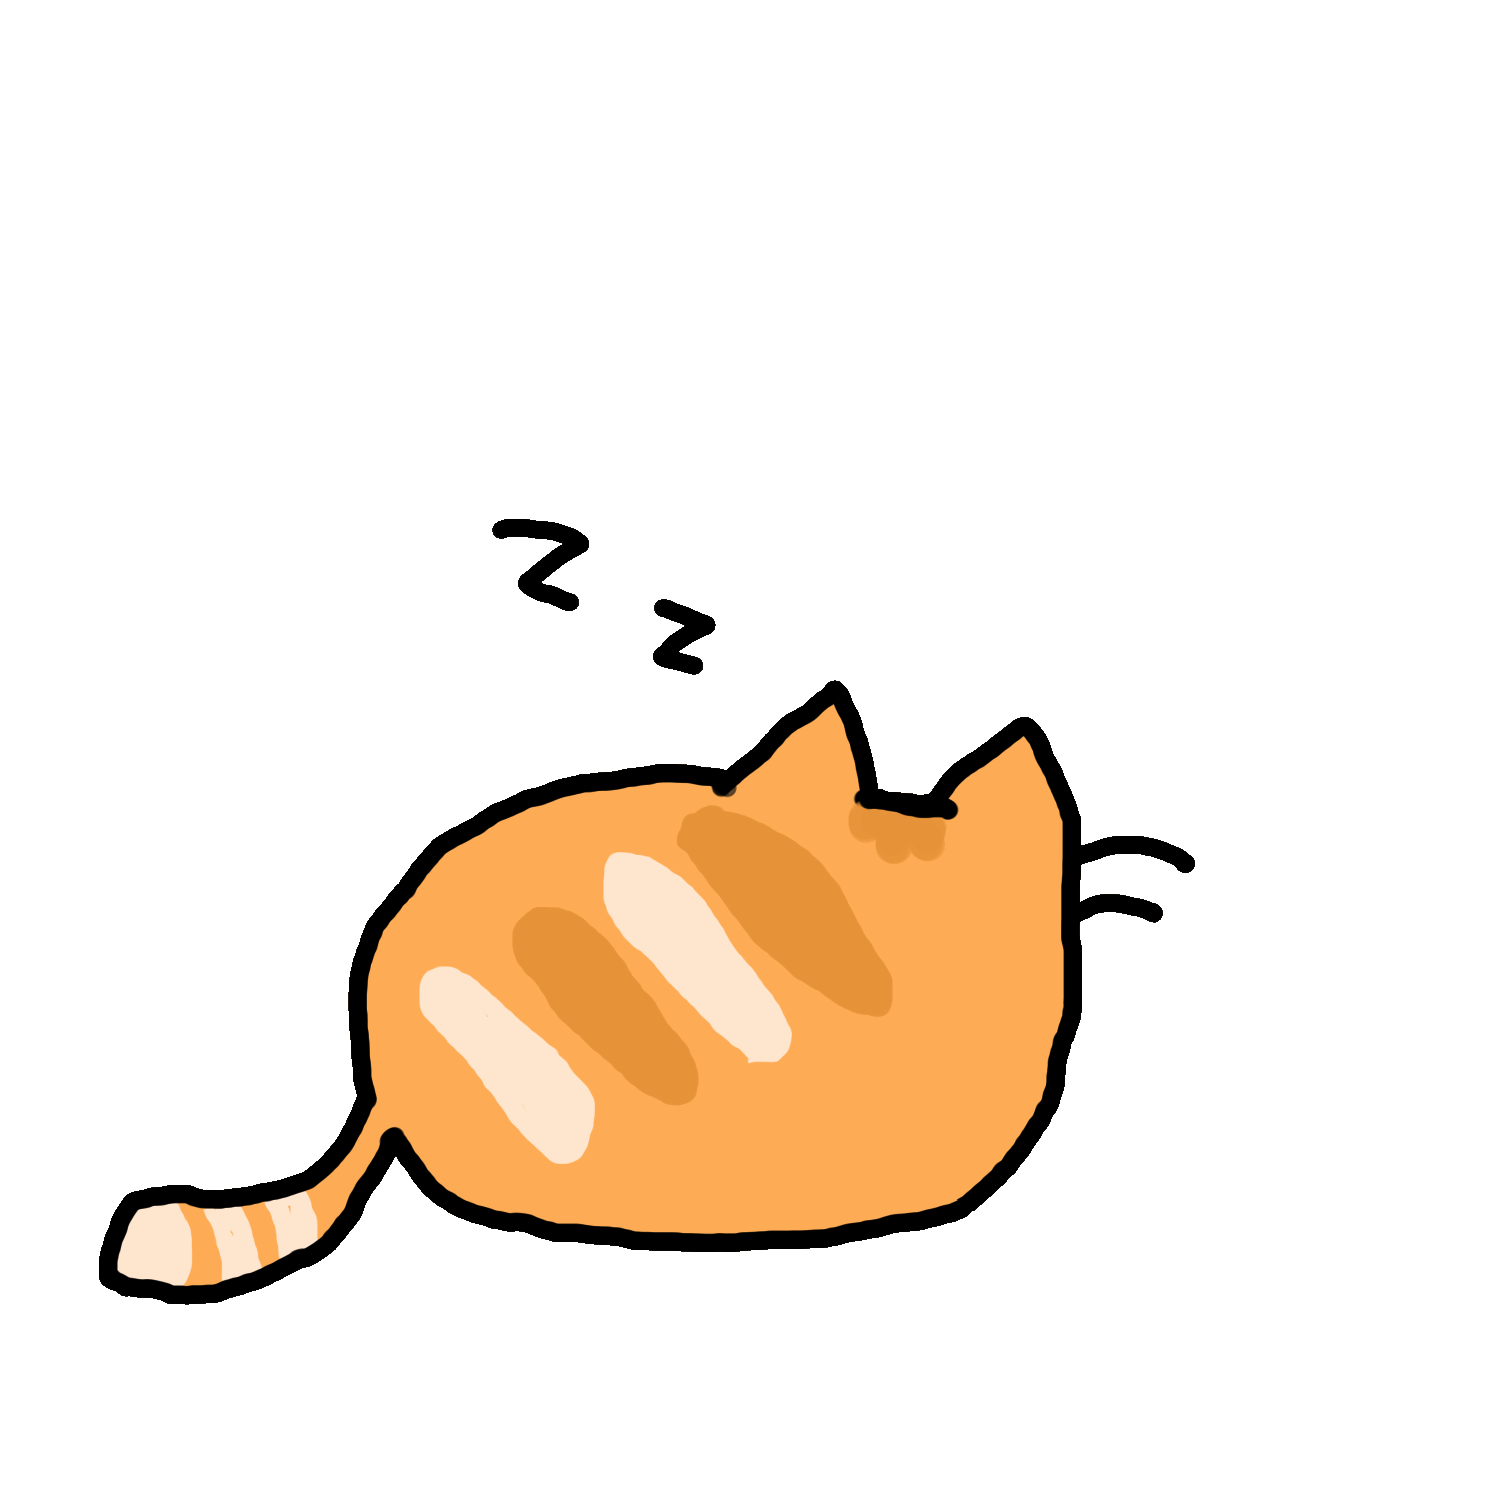 40 Super Cute Animated Cat Kawaii Pixel Art Gifs - Best Animations -  ClipArt Best - ClipArt Best